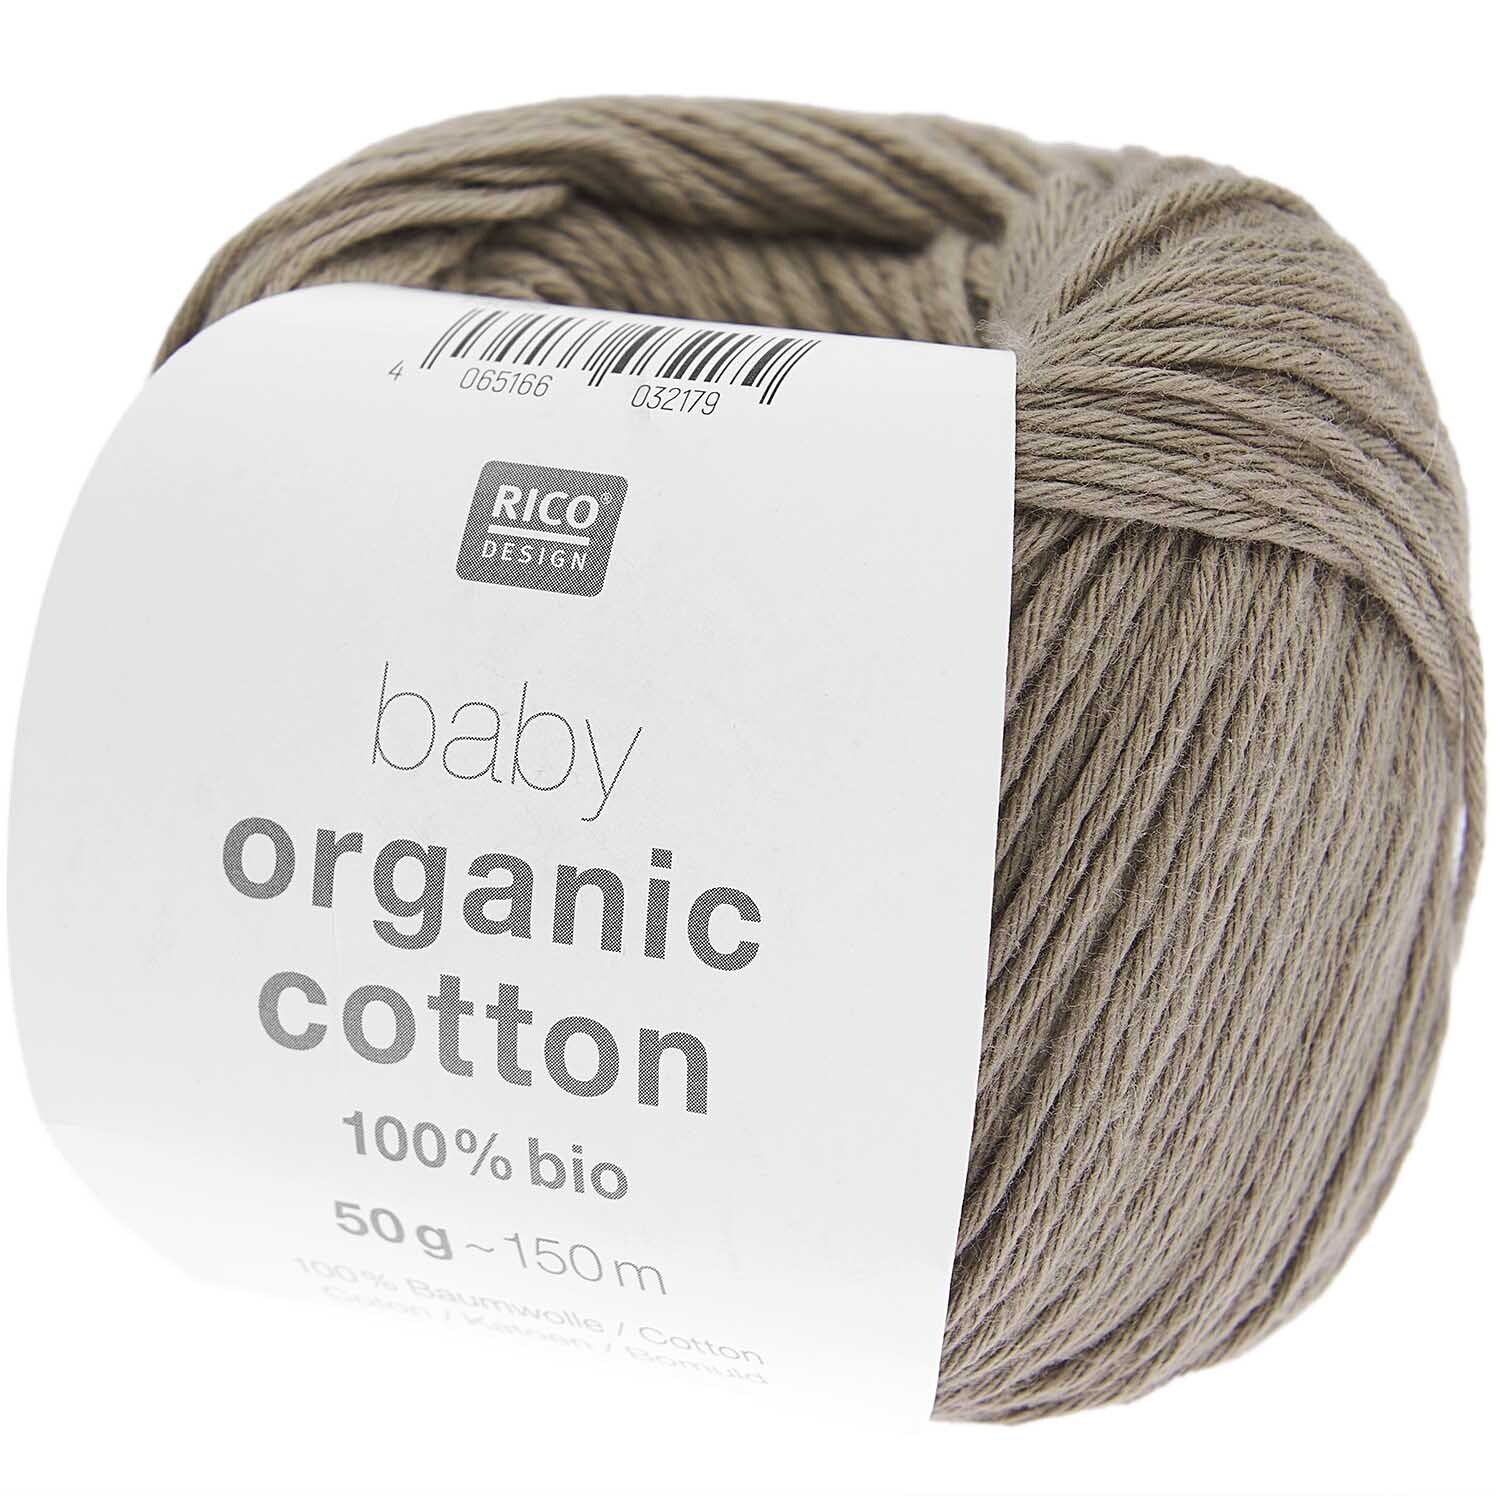 Baby Organic Cotton